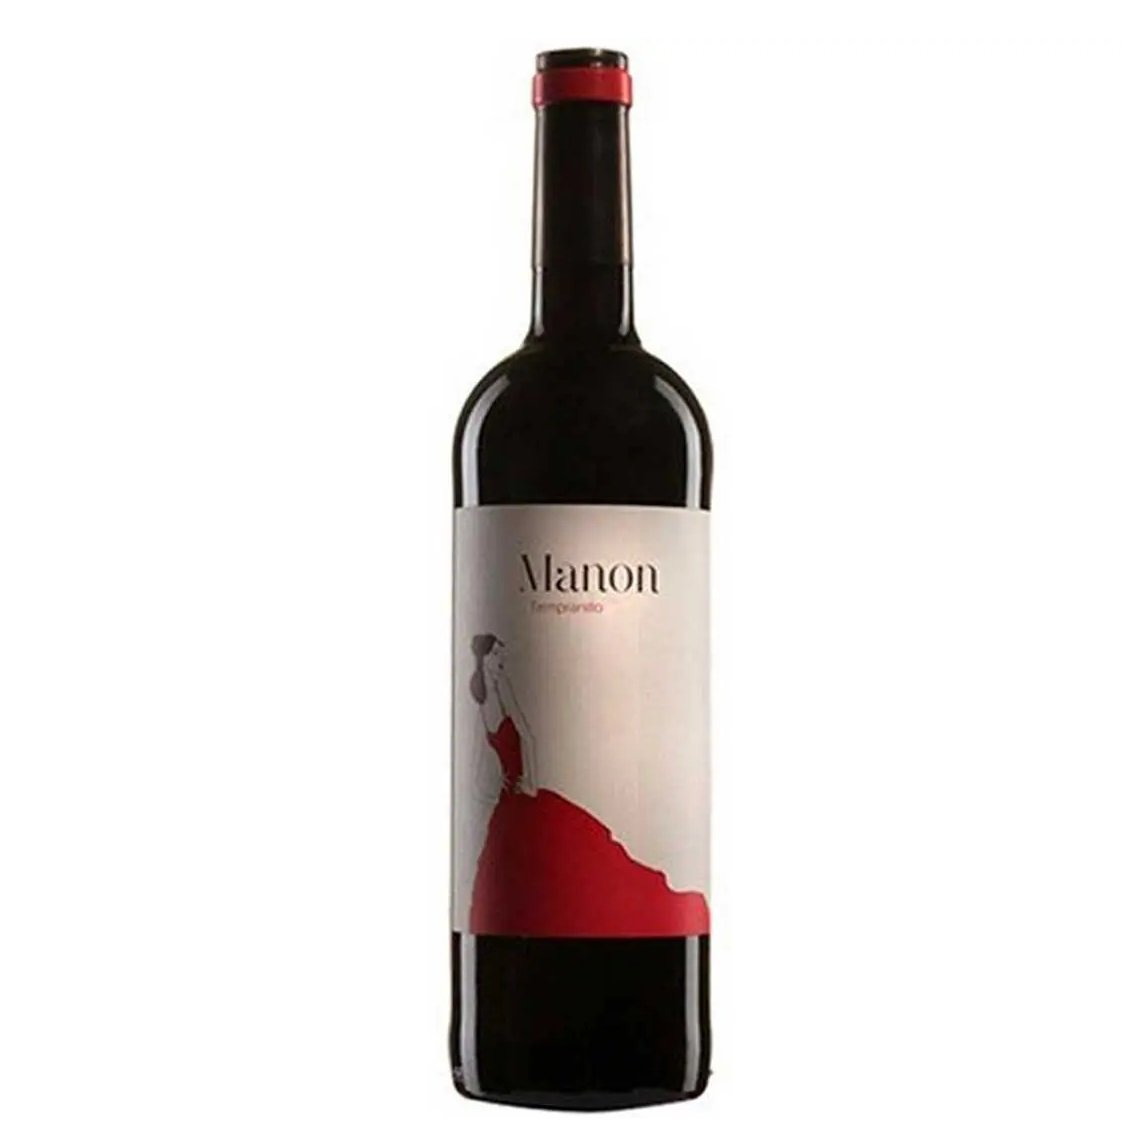 Вино Mano А Mano Manon Tempranillo, червоне, сухе, 0,75 л - фото 1